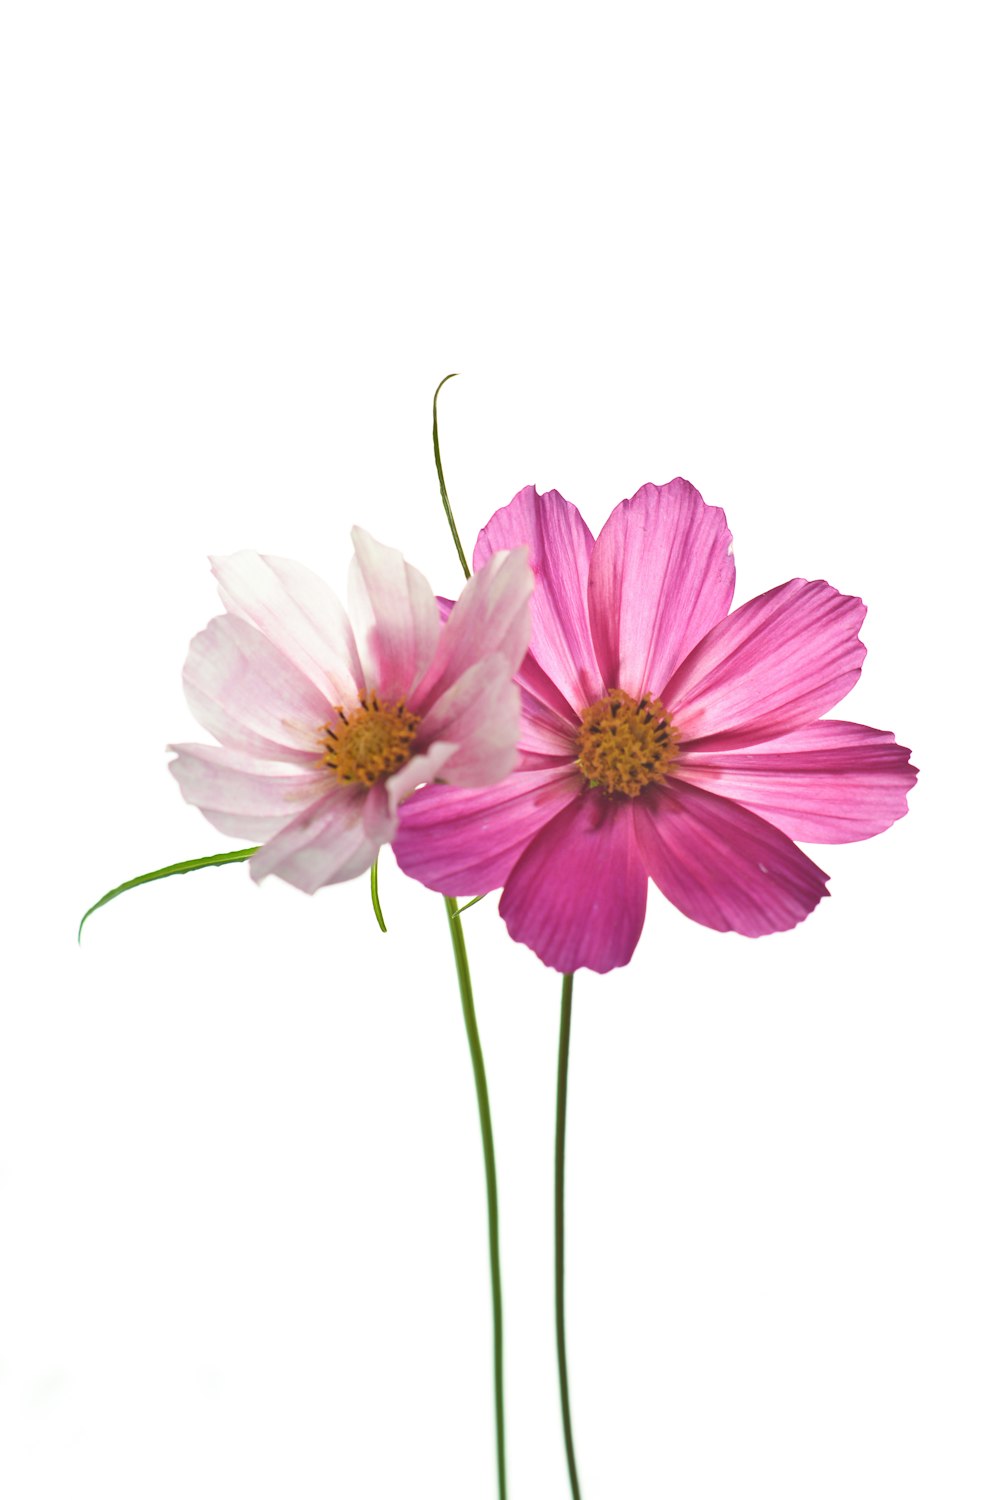 100 Pink Flower Images Download Free Pictures On Unsplash